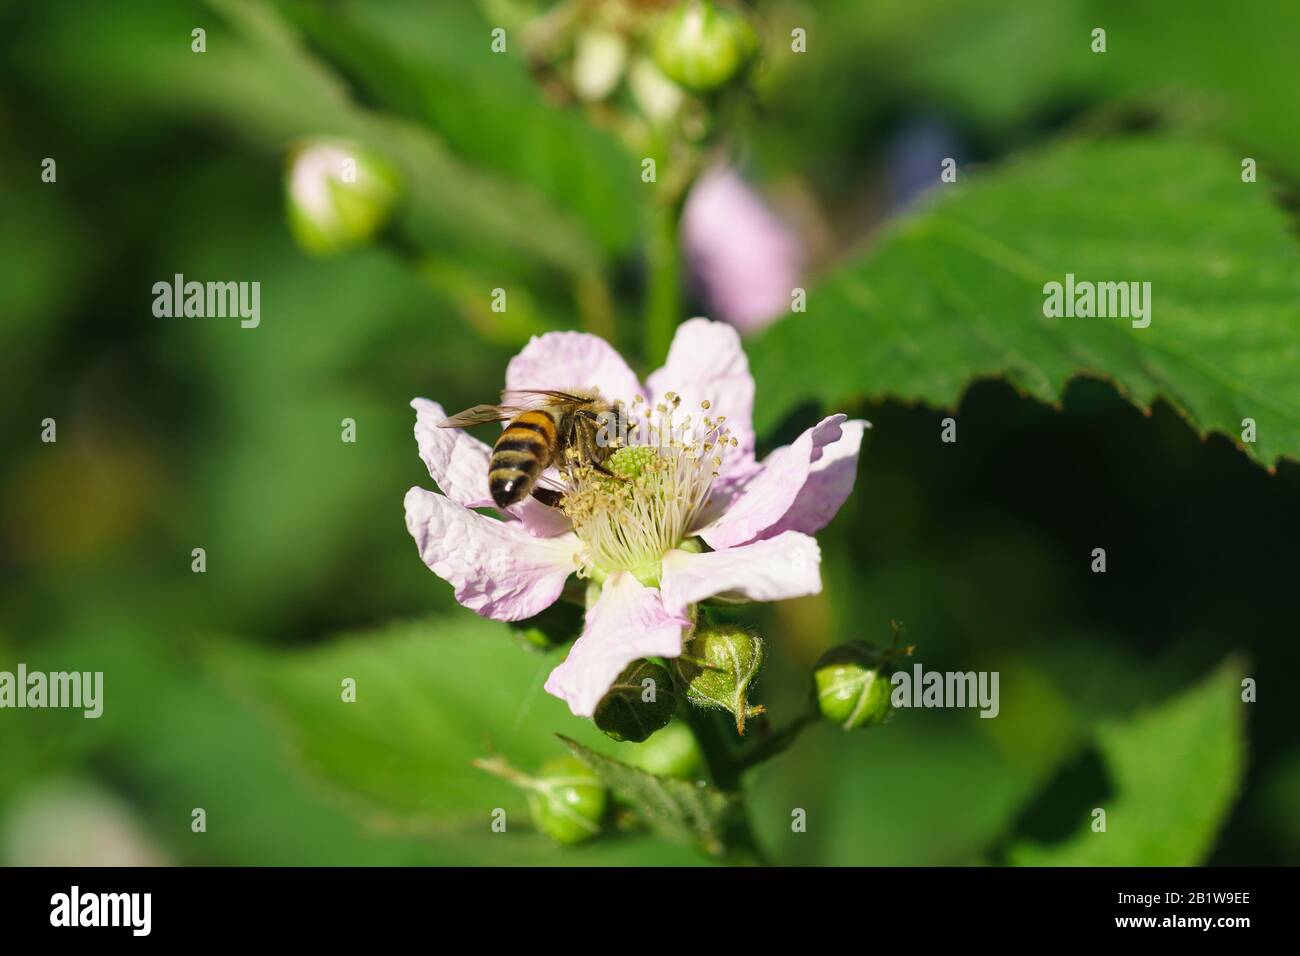 Bee on flower BlackBerry (lat. Rubus). Macro Stock Photo